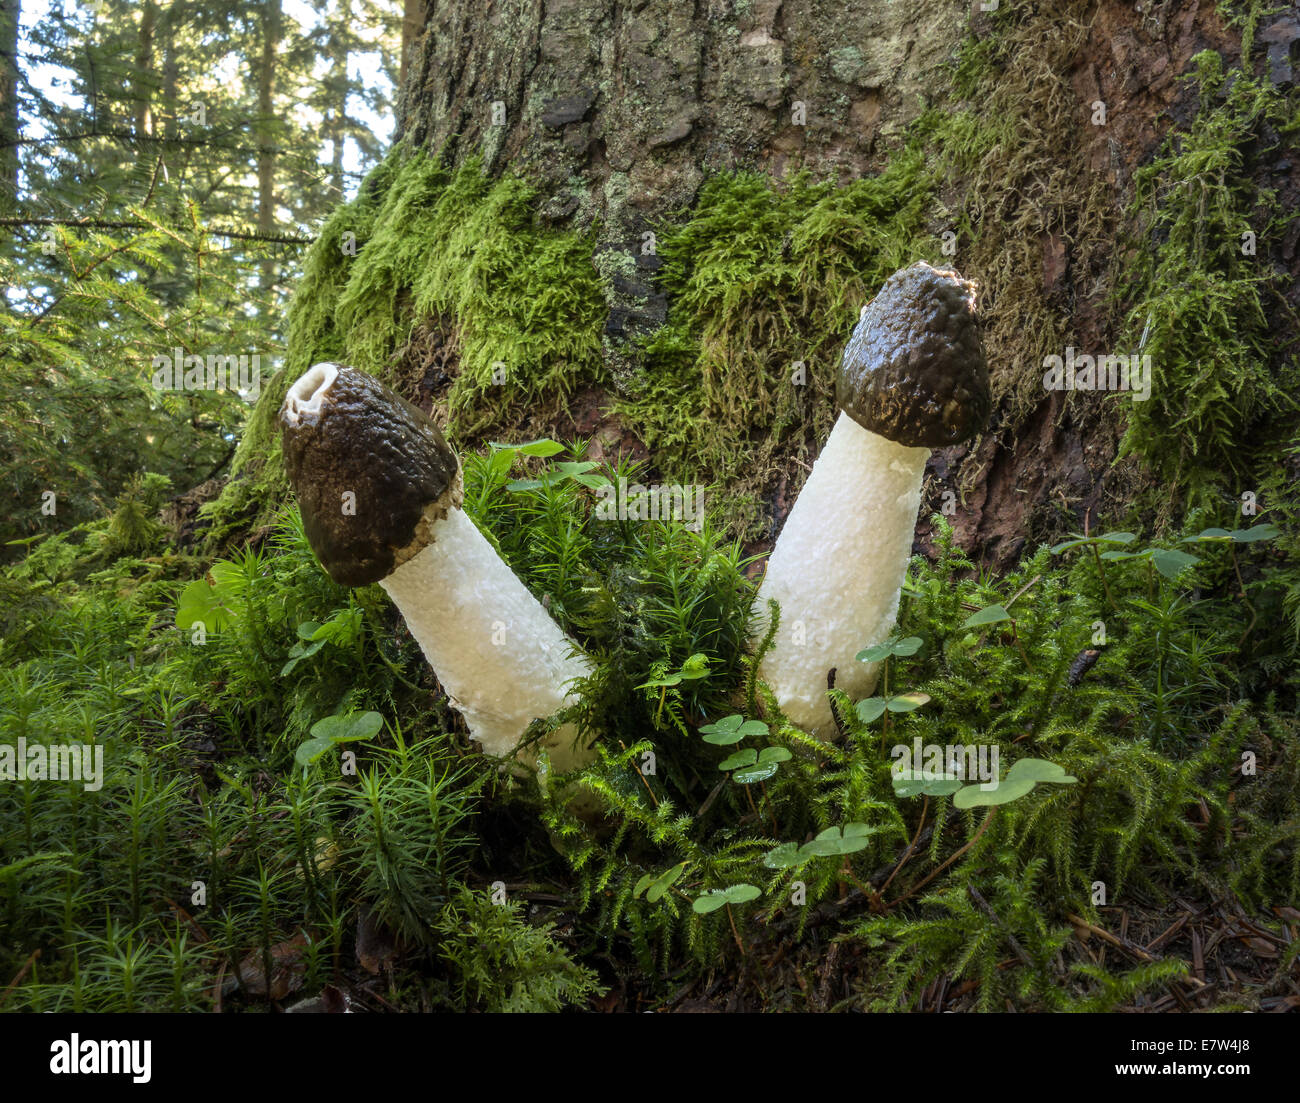 Two common stinkhorns - Phallus impudicus Stock Photo